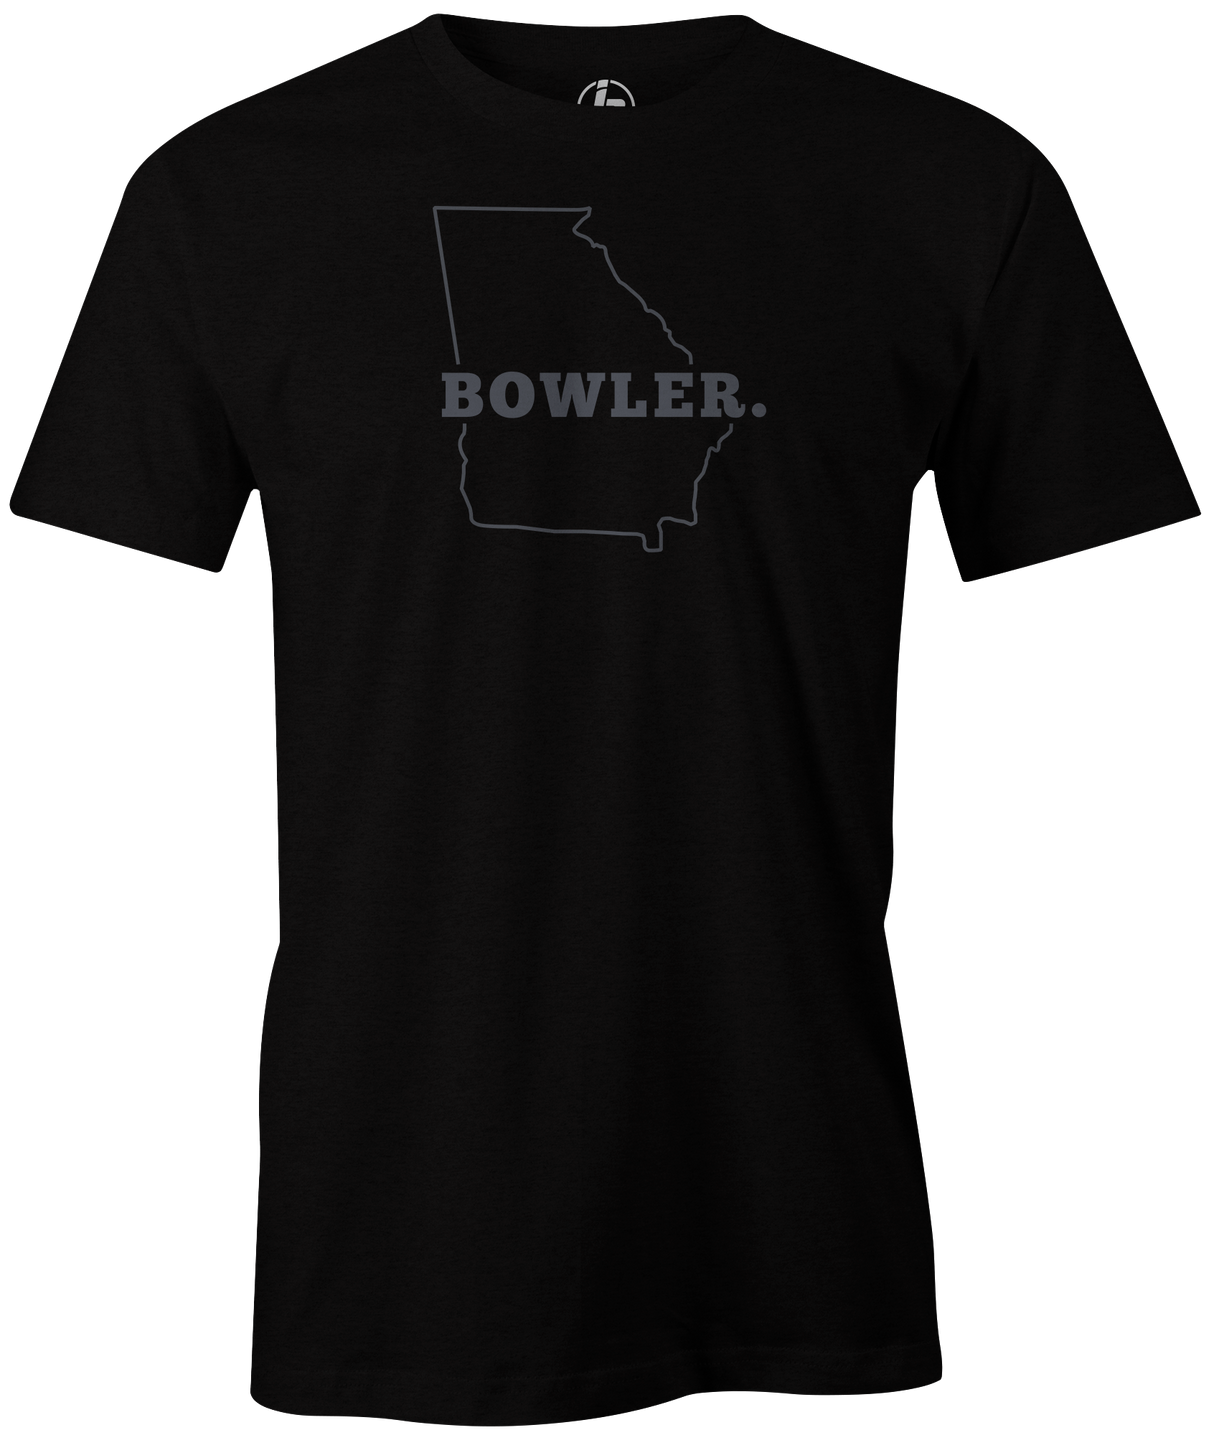 Georgia State Men's Bowling T-shirt, Black, Cool, novelty, tshirt, tee, tee-shirt, tee shirt, teeshirt, team, comfortable